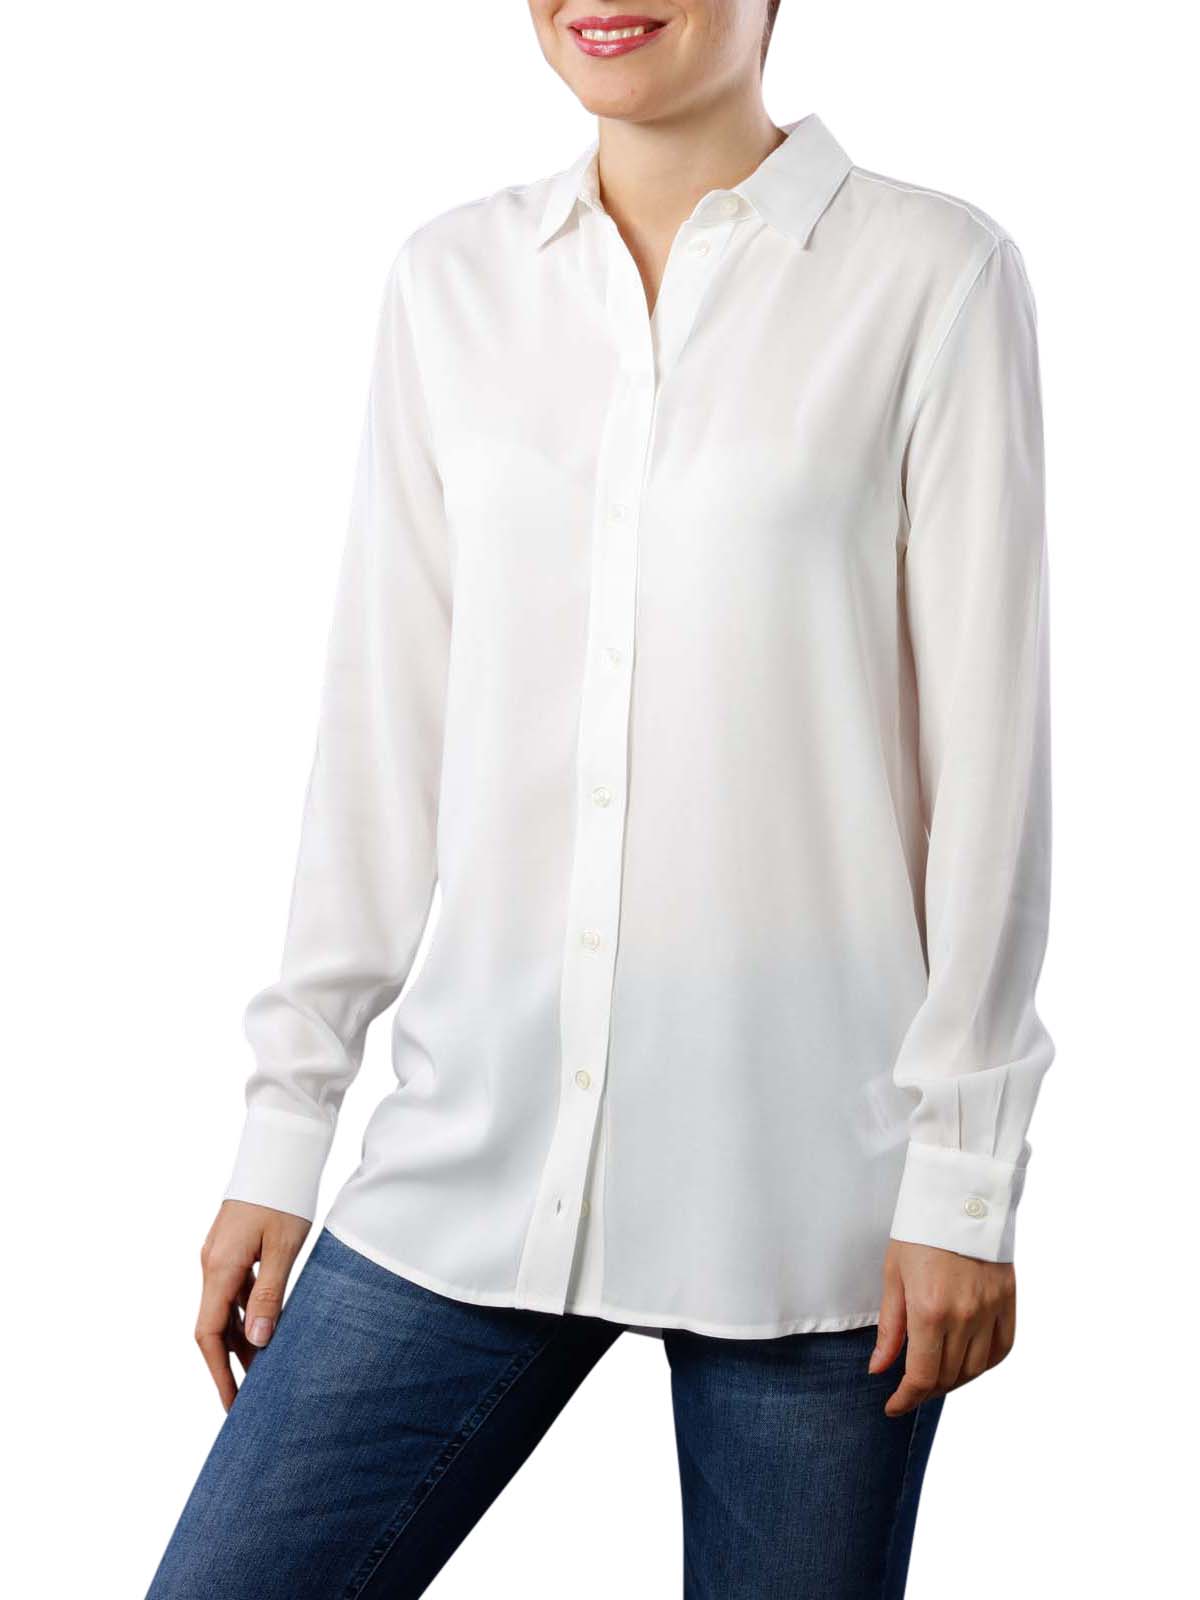 Marc O'Polo Shirt Long Sleeves paper white Marc O'Polo Women‘s Shirt ...